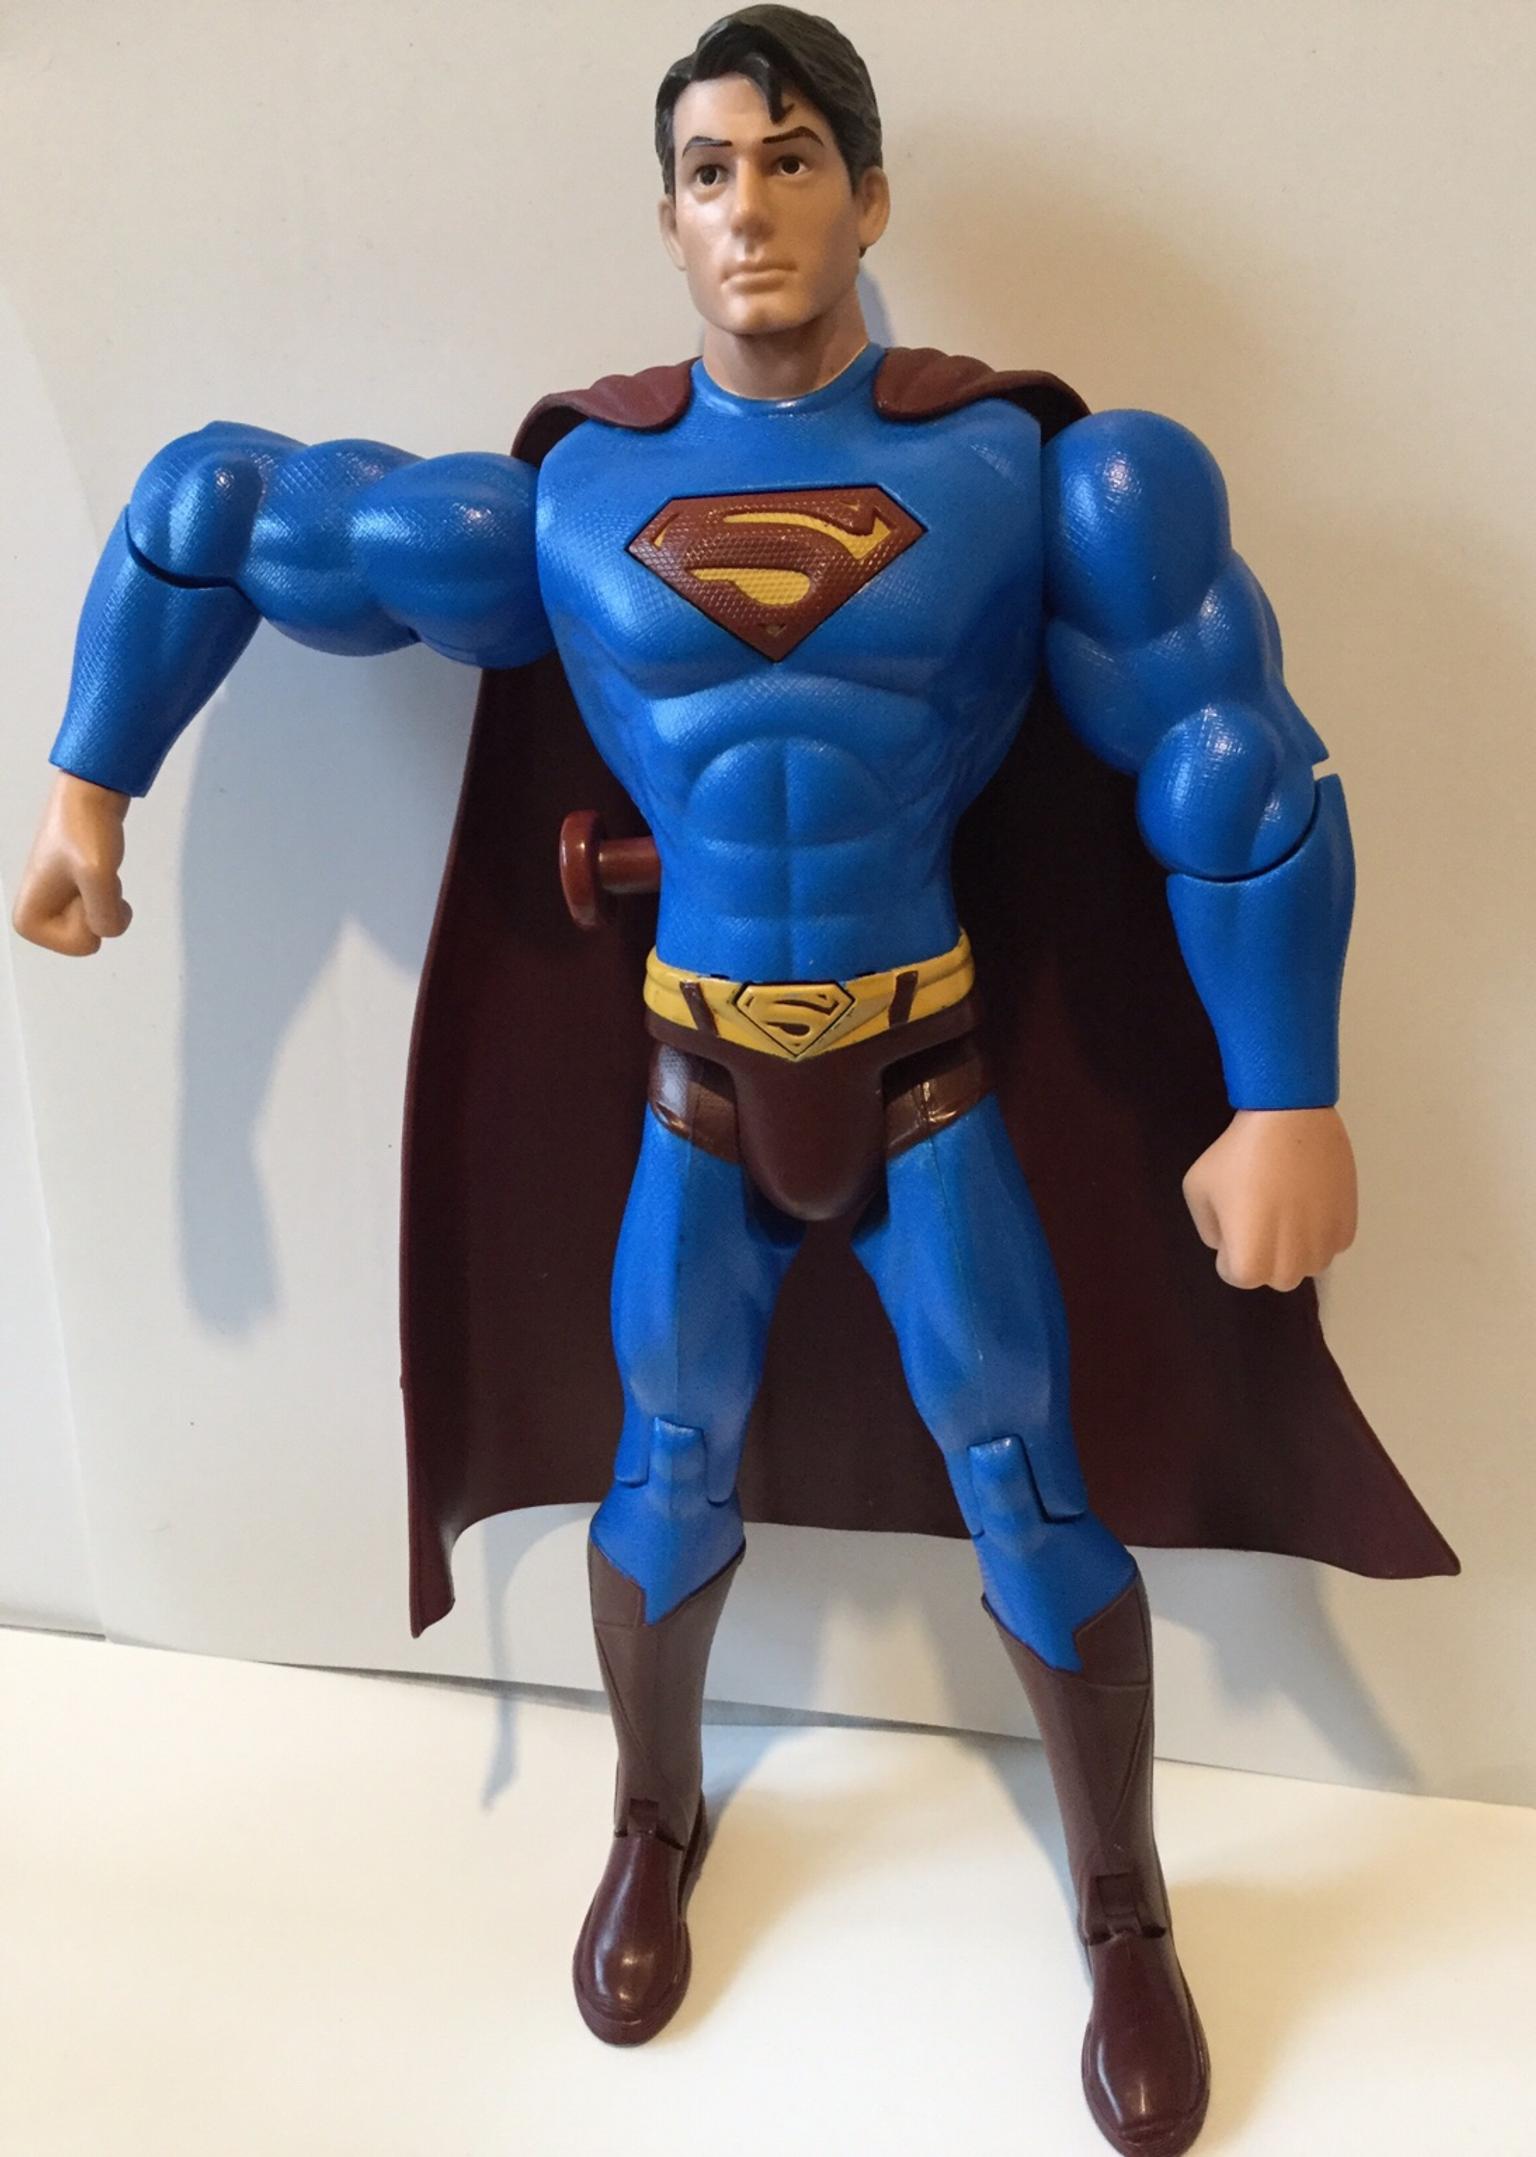 talking superman action figure